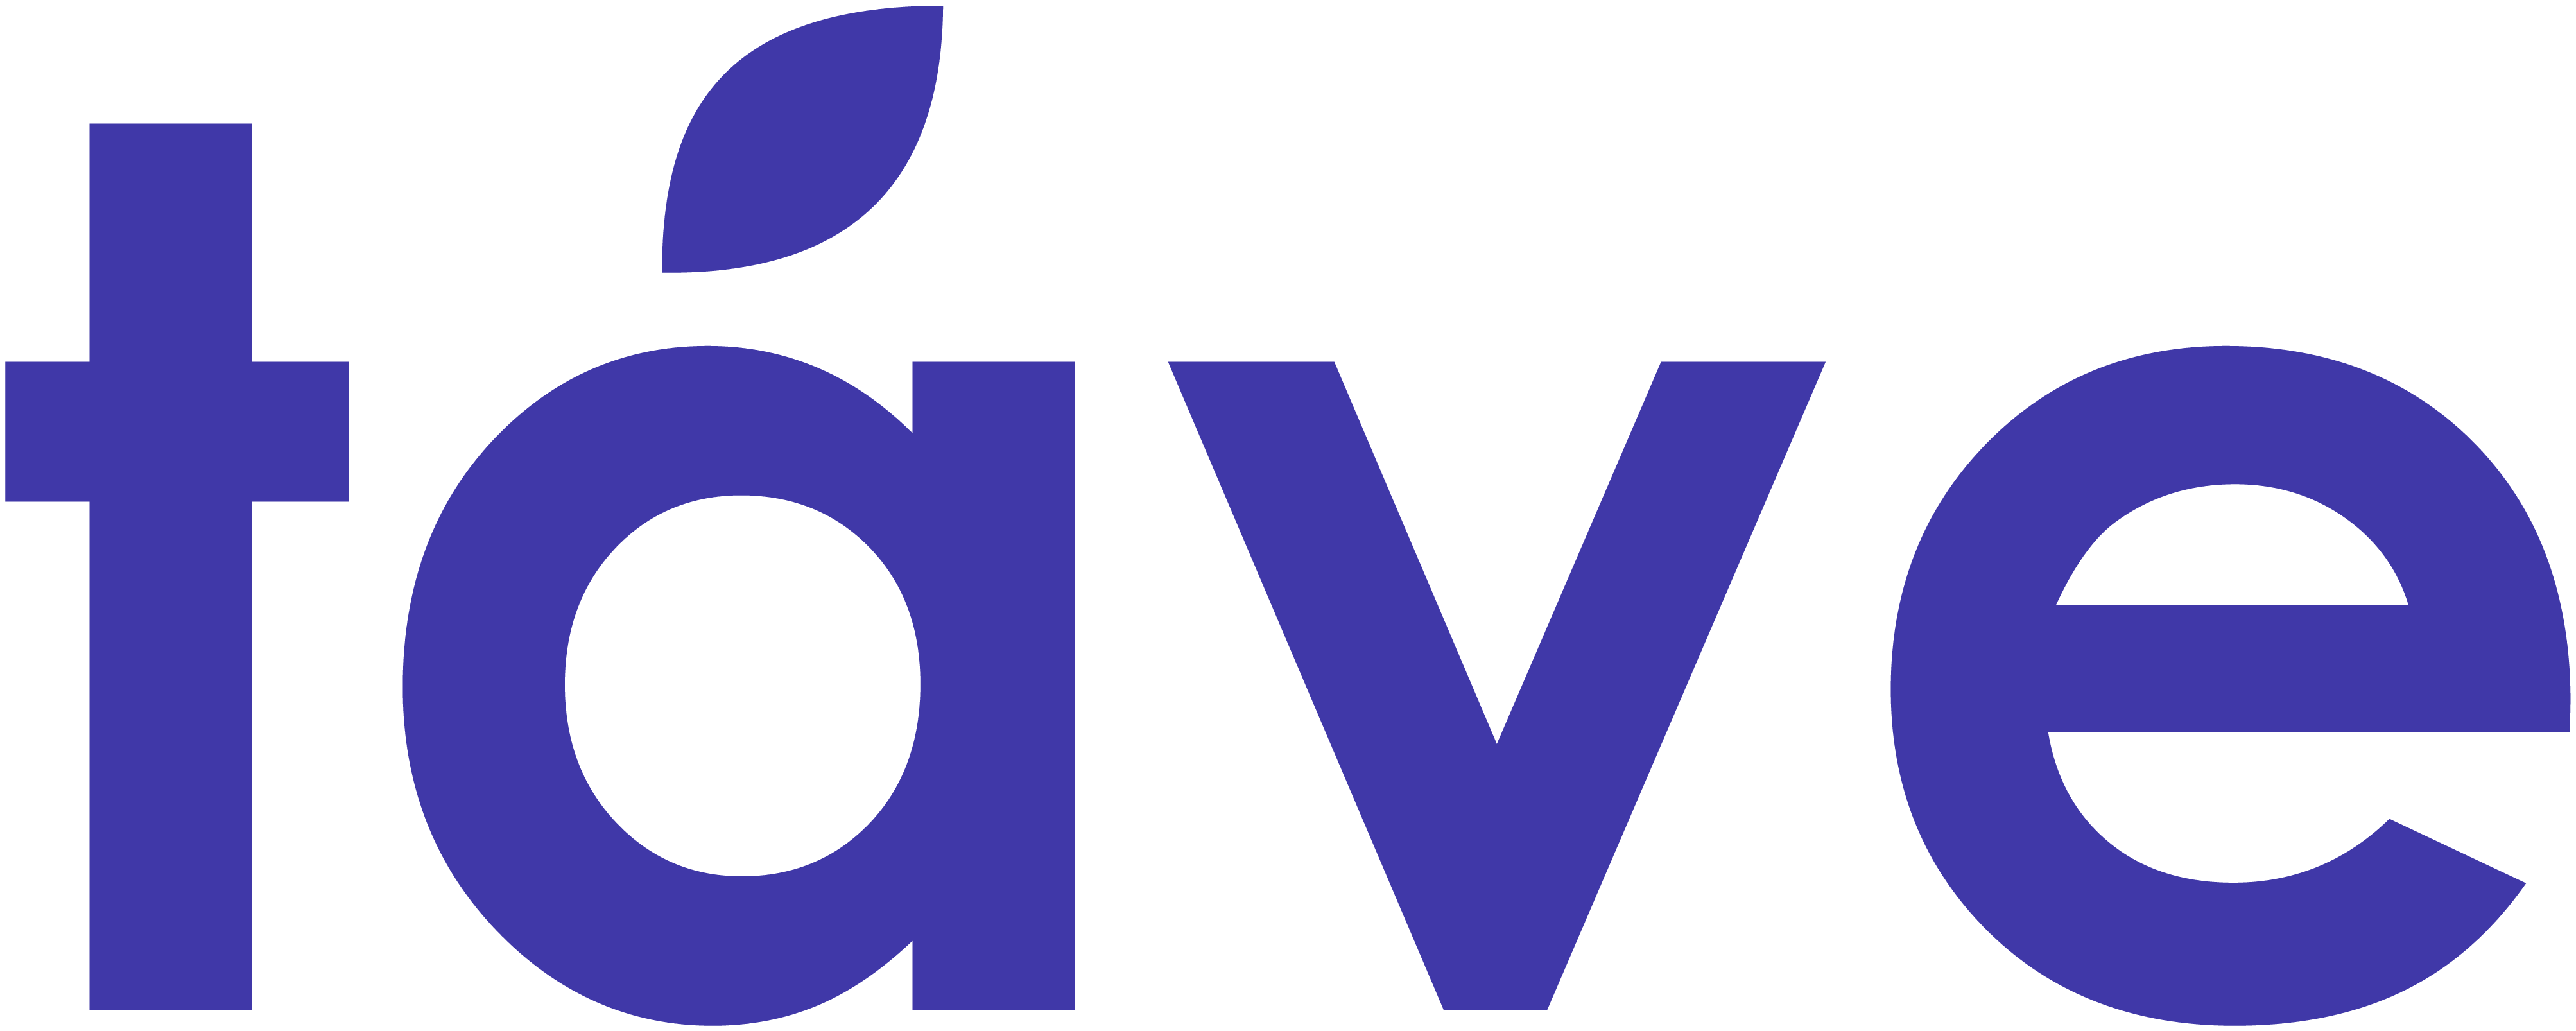 Tave-Logo__Purple.png